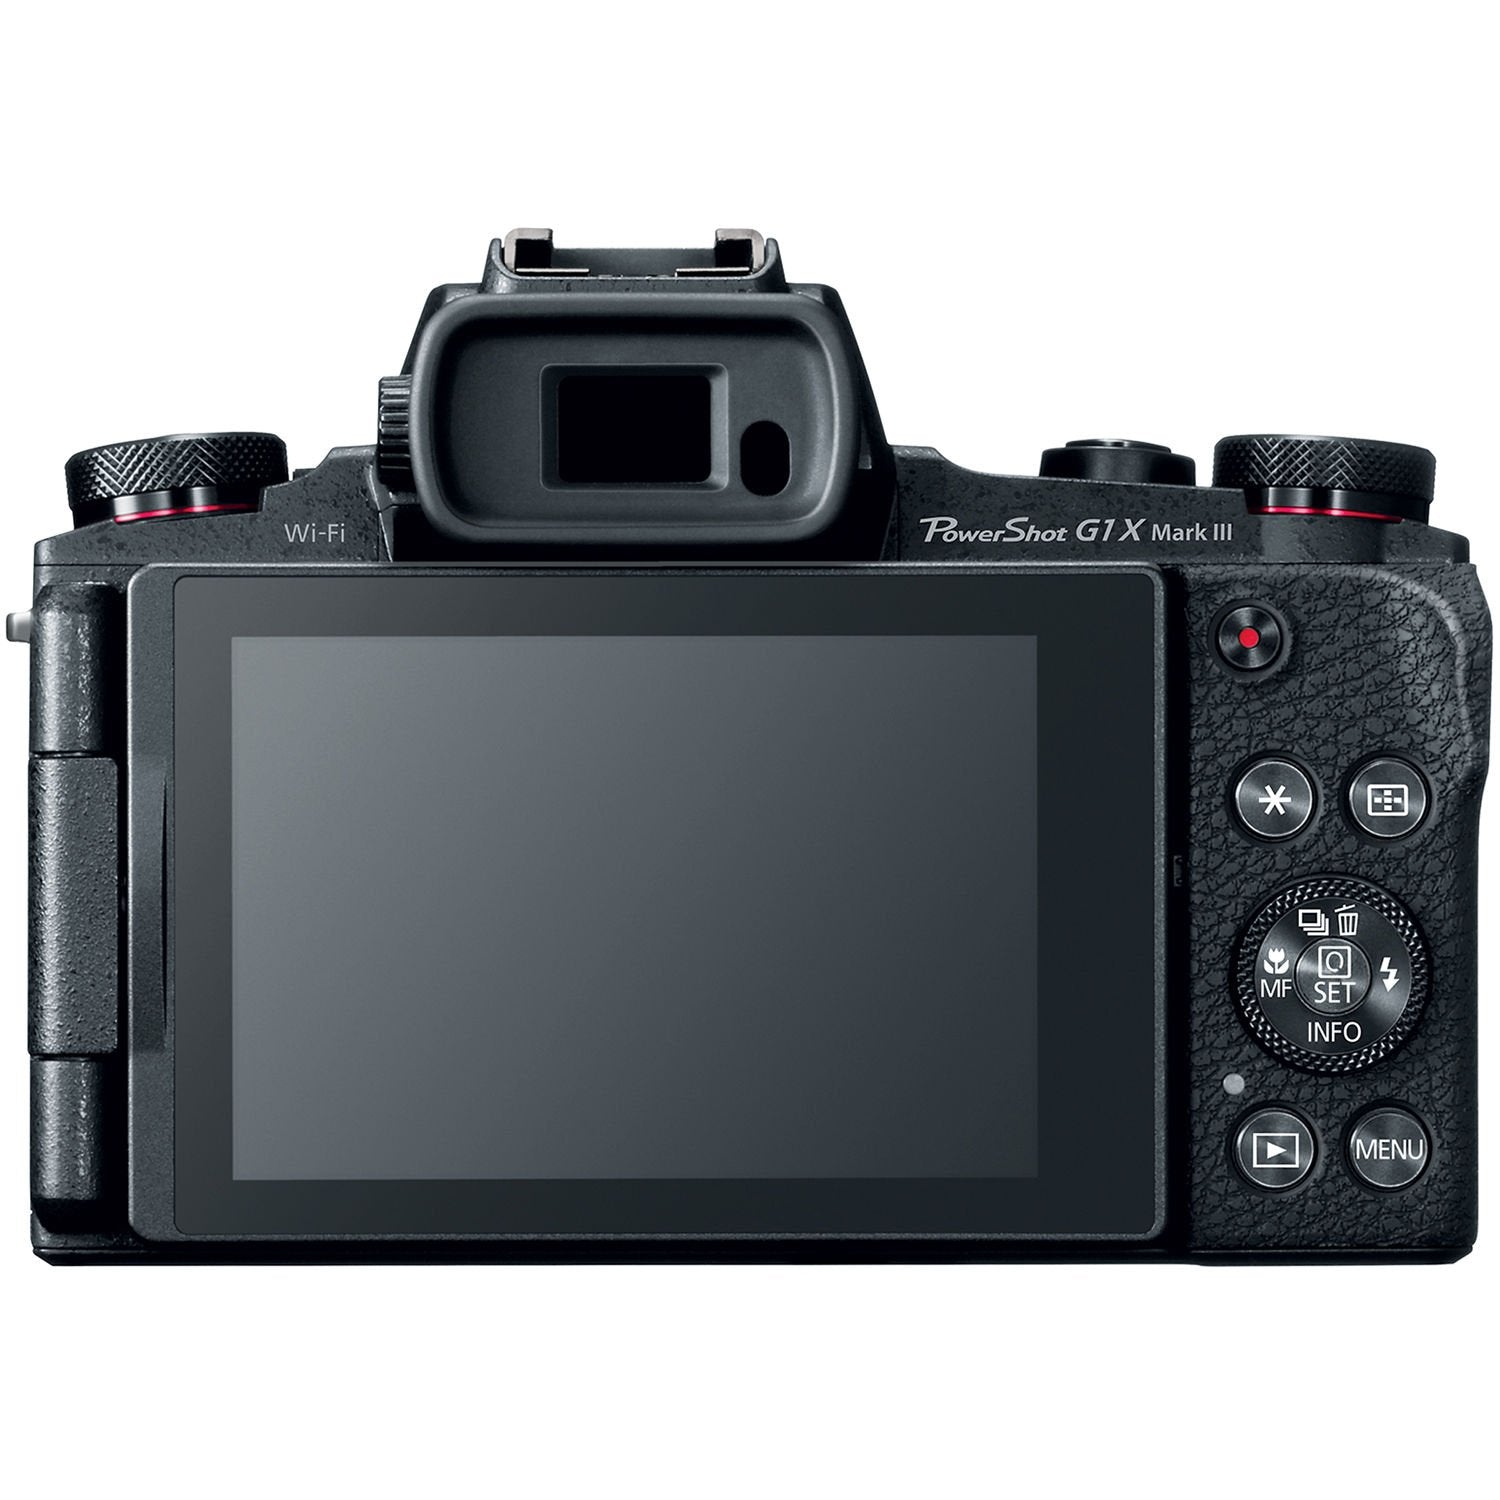 6Ave Canon PowerShot G1 X Mark III Digital Camera #2208C001 International Version (No Warranty) + Replacement Lithium Io